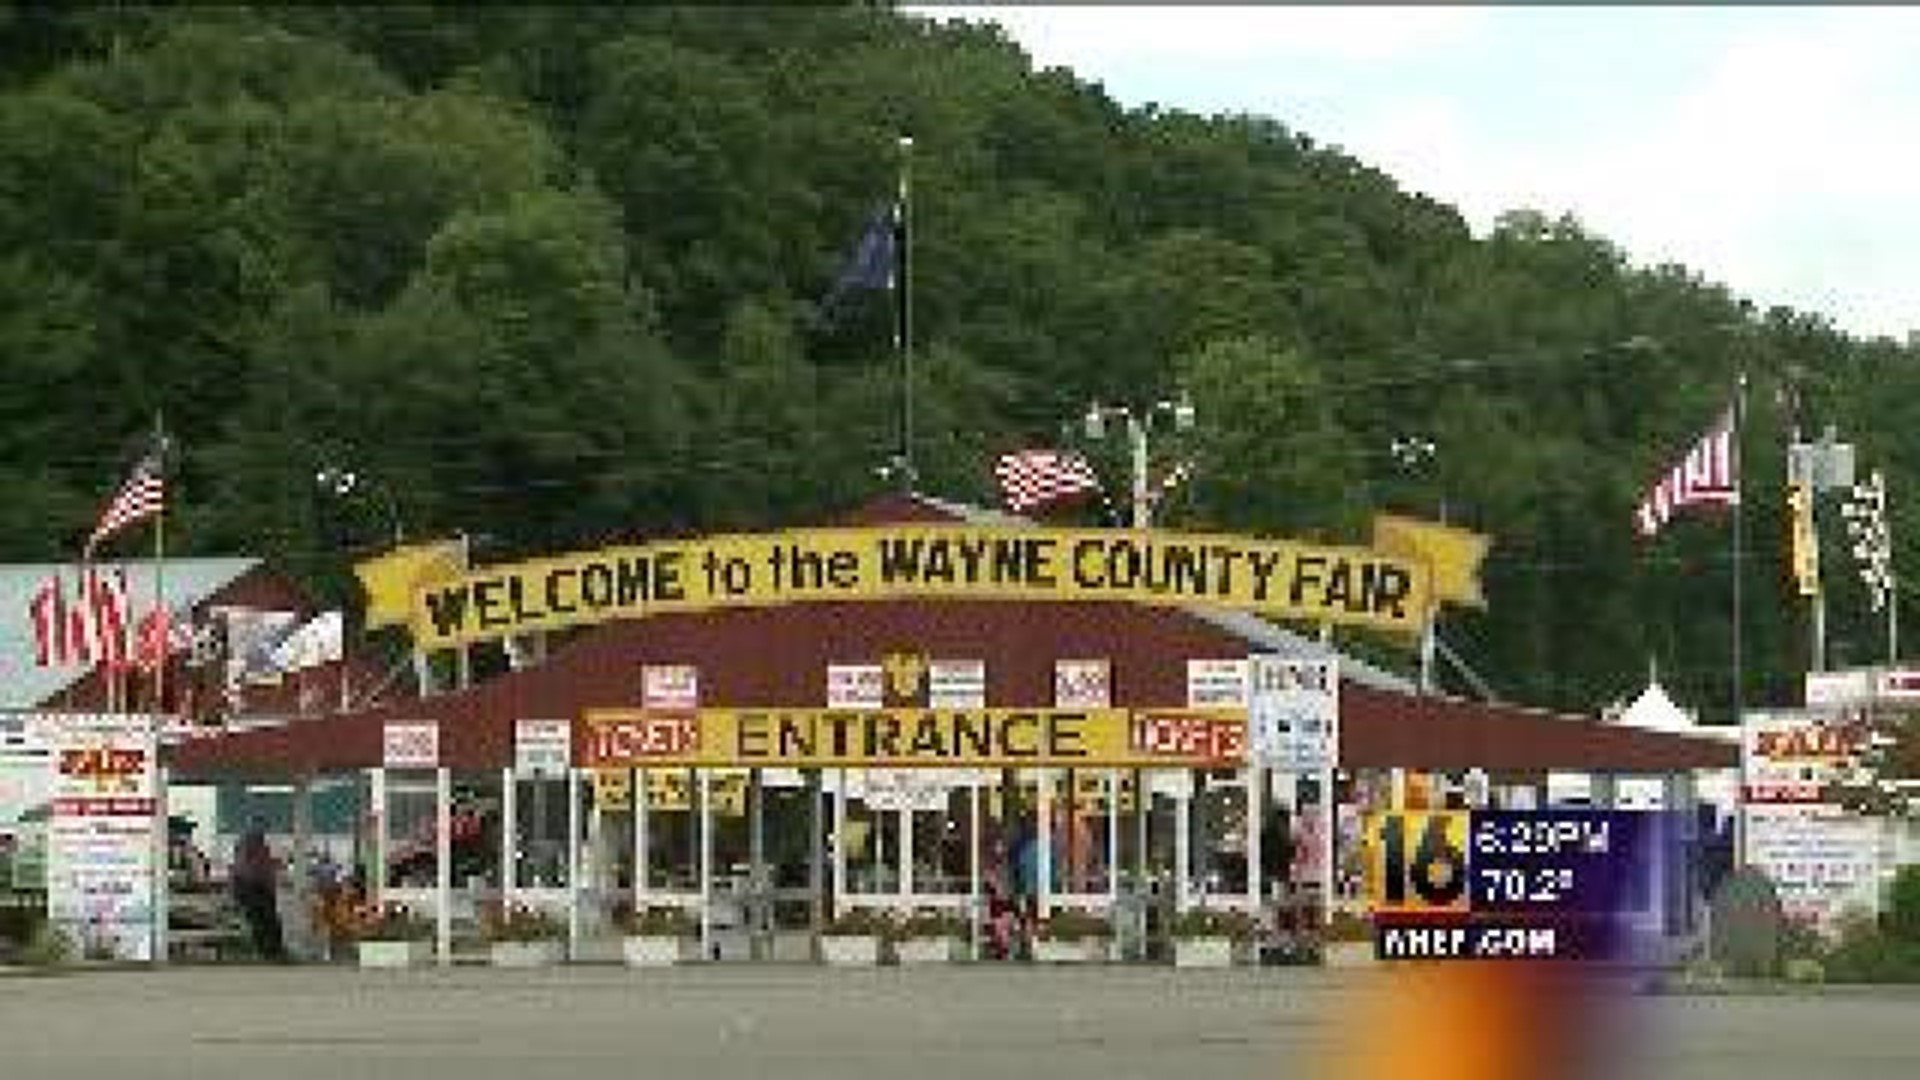 Wayne County Fair In Full Swing